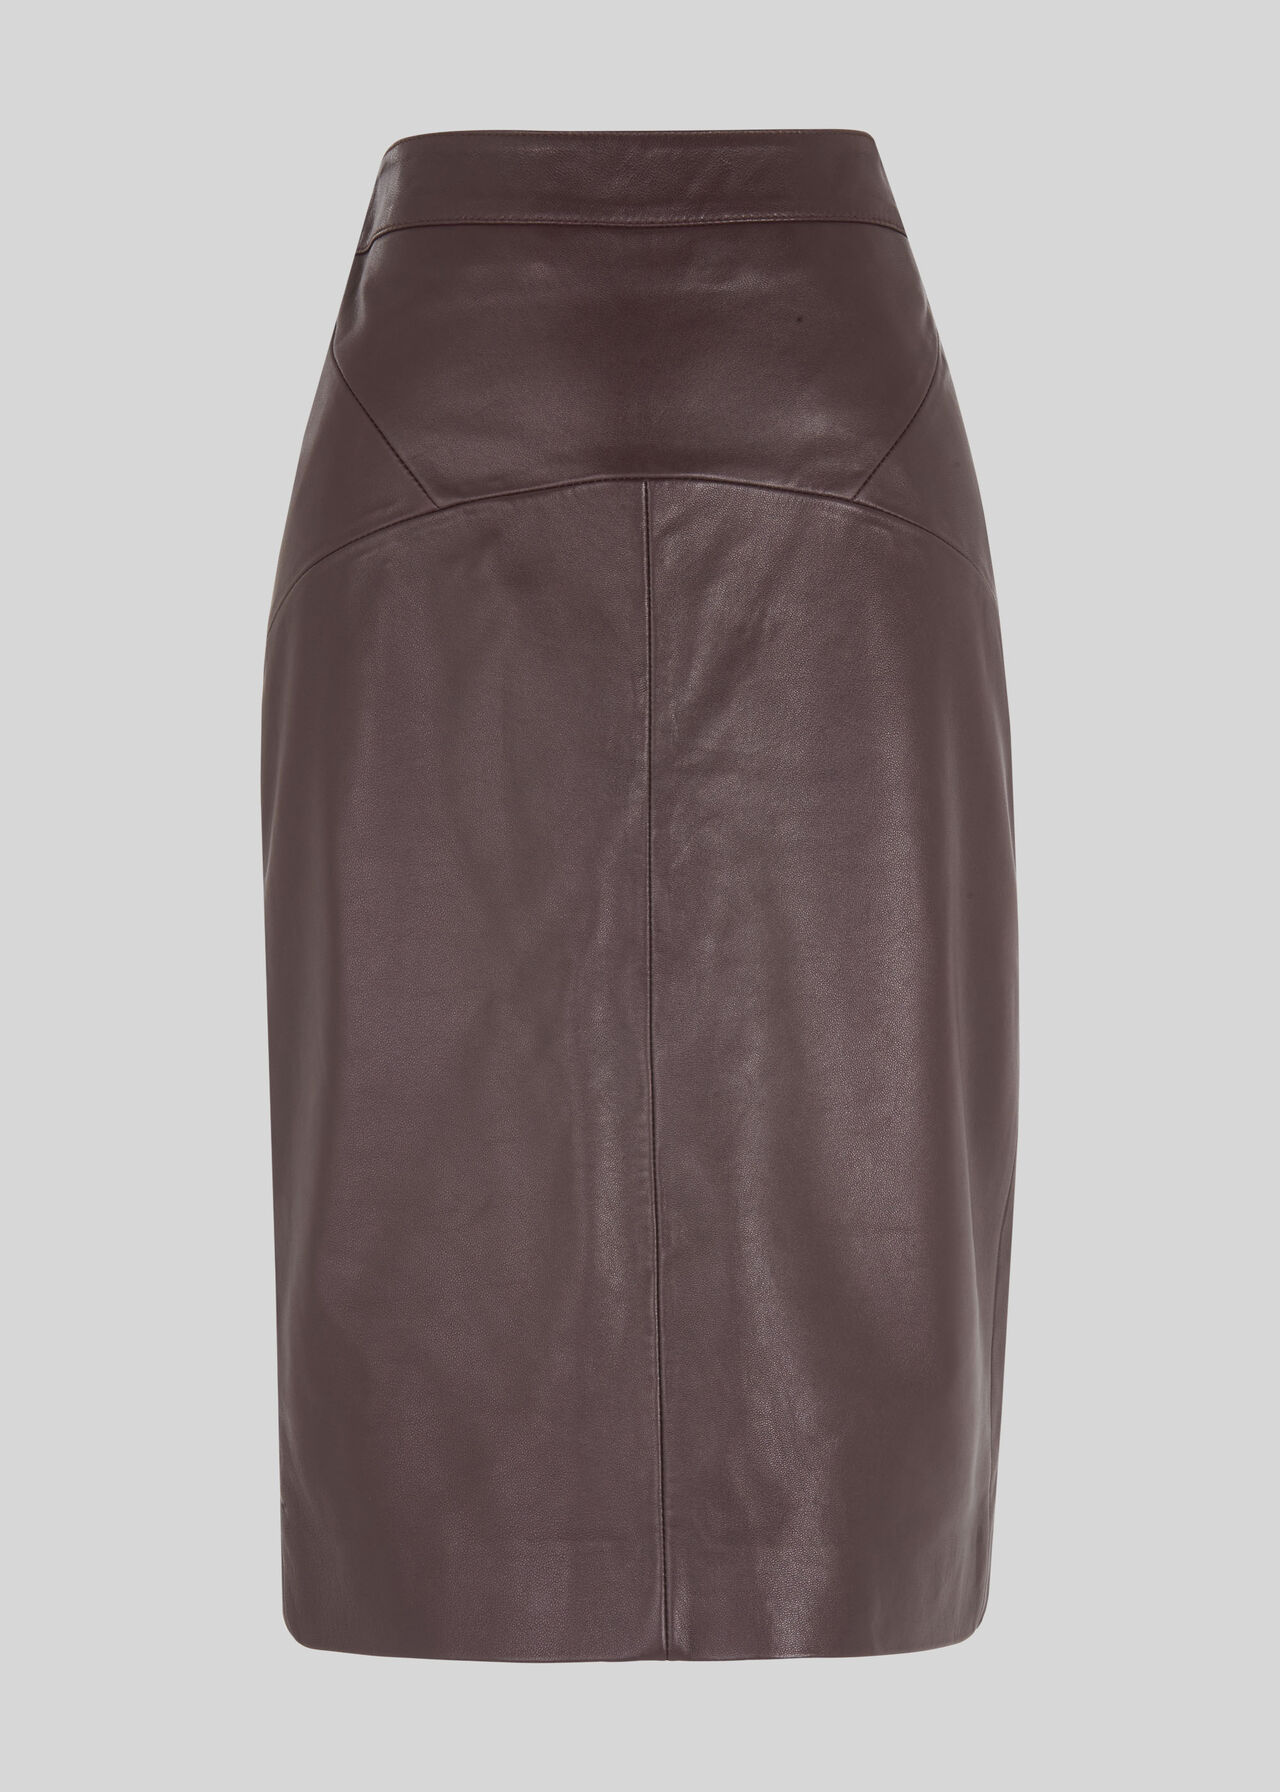 Kel Leather Pencil Skirt Burgundy